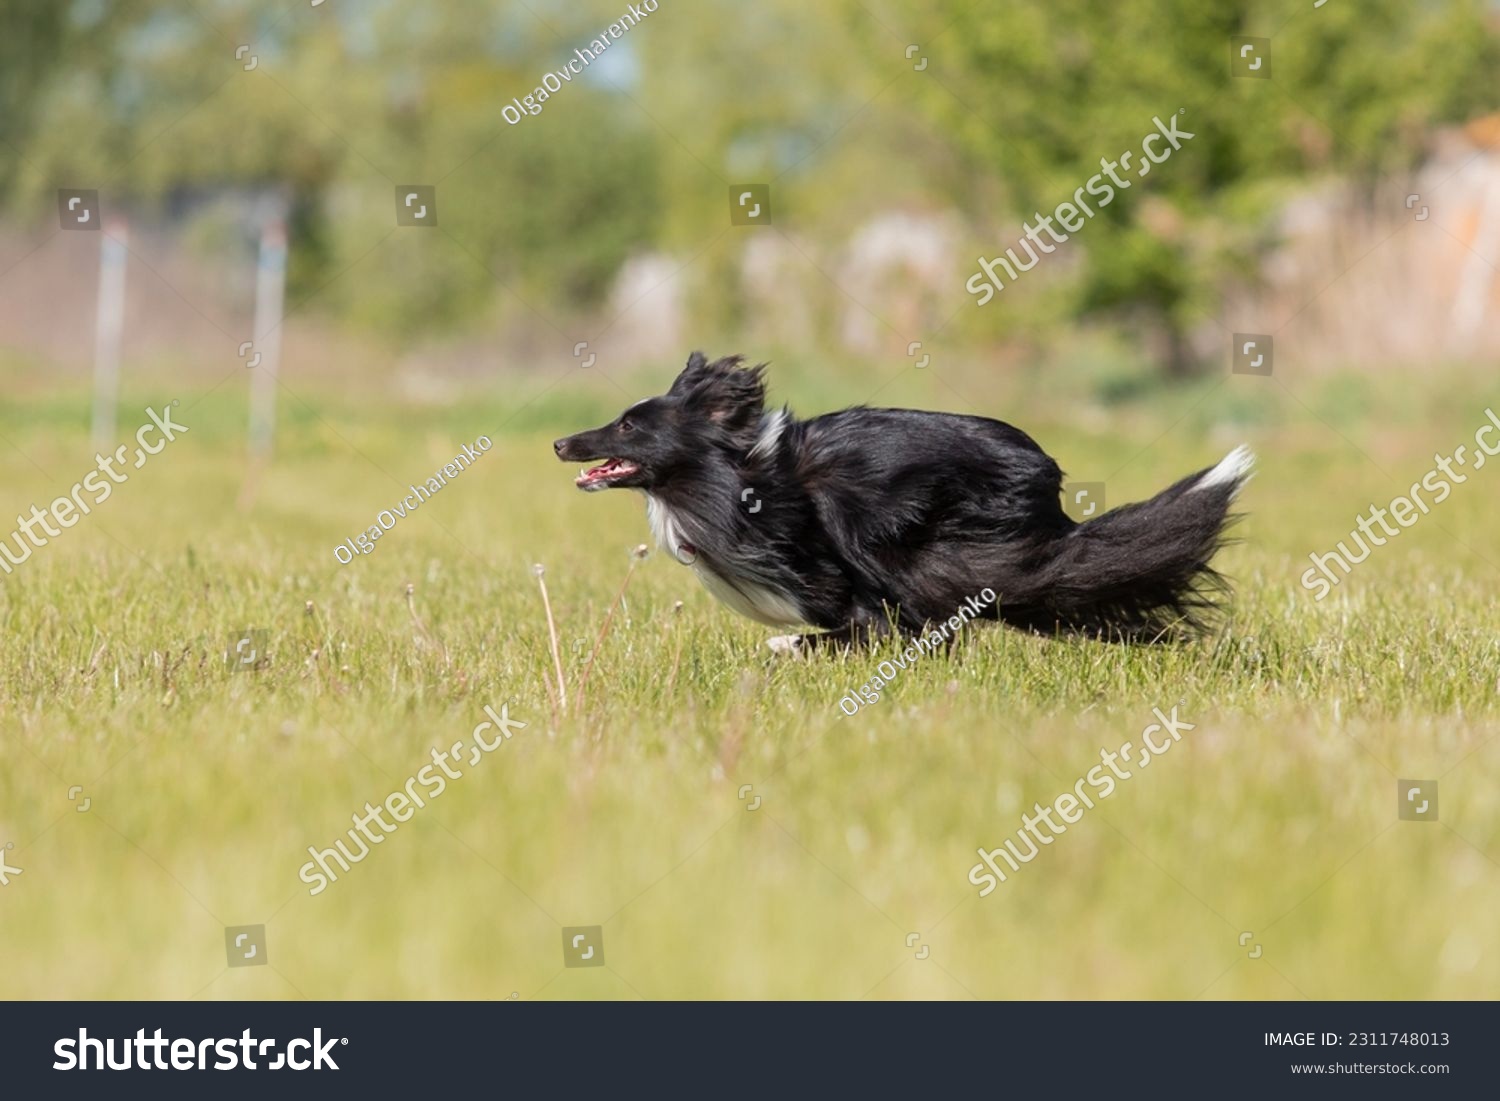 Sheltie dog running on the grass #2311748013